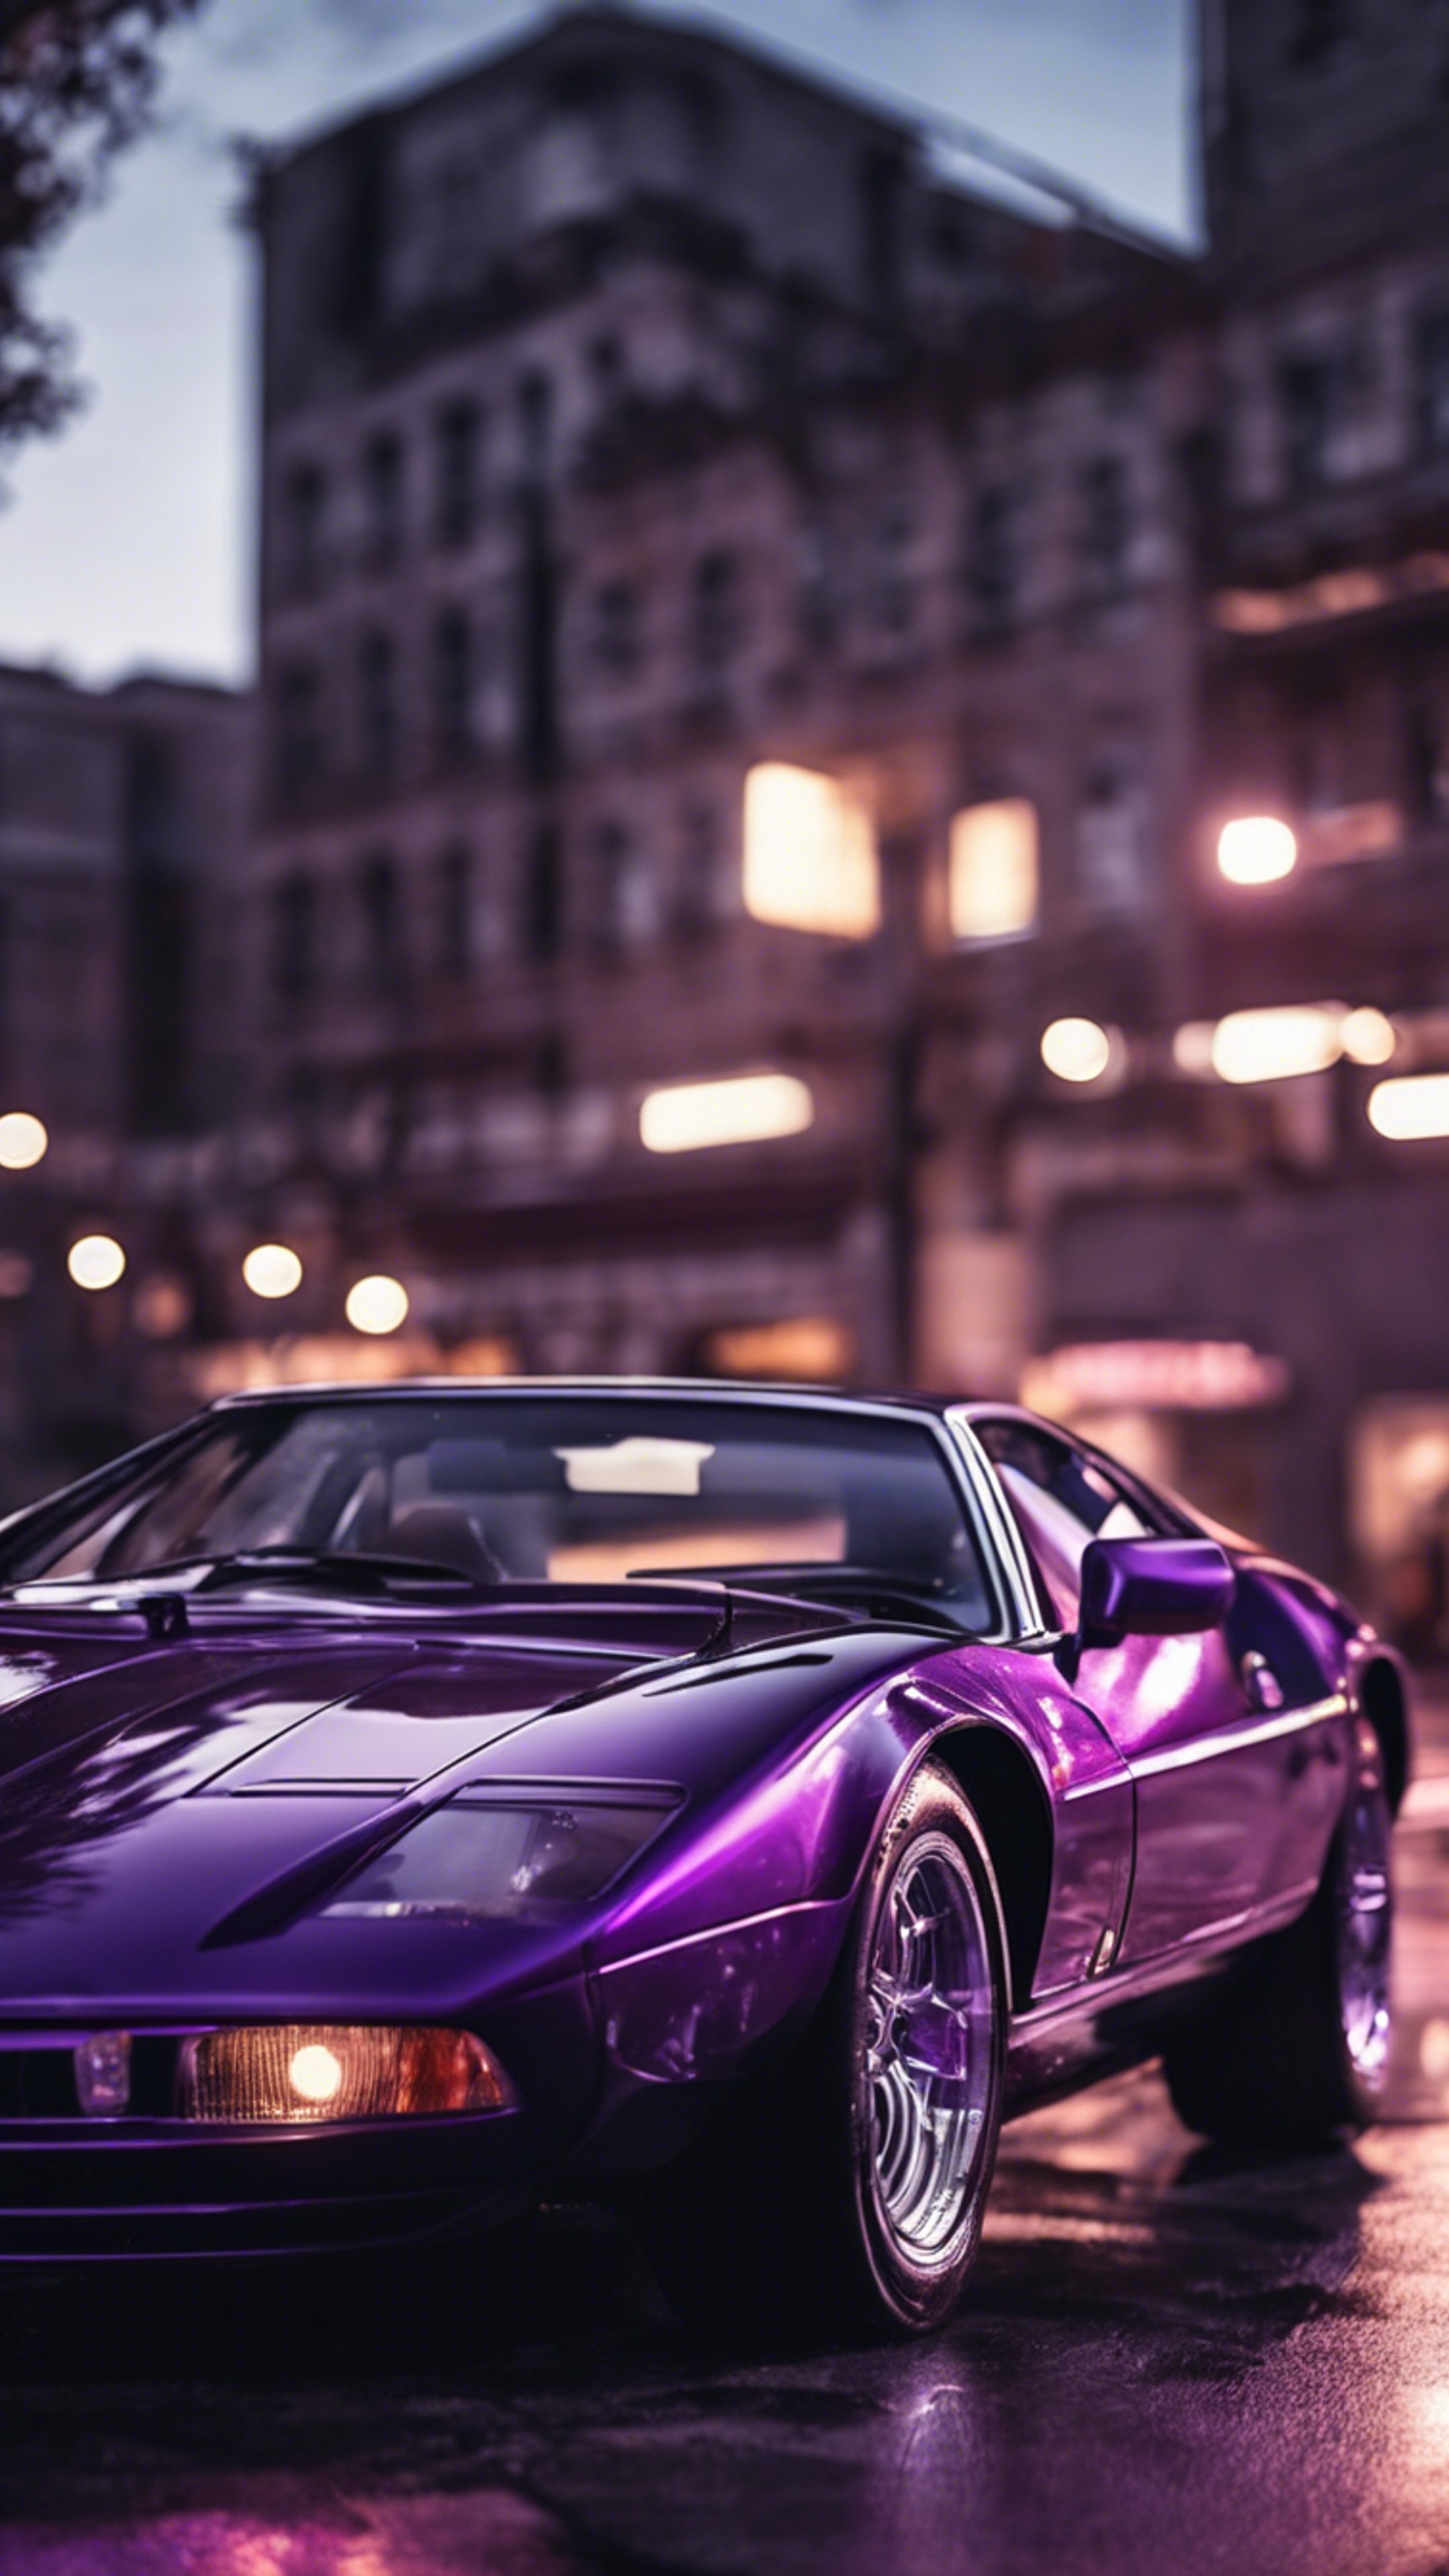 A sleek shiny sportscar, in a cool dark purple hue. Wallpaper[7dc89e05fe314840a57c]